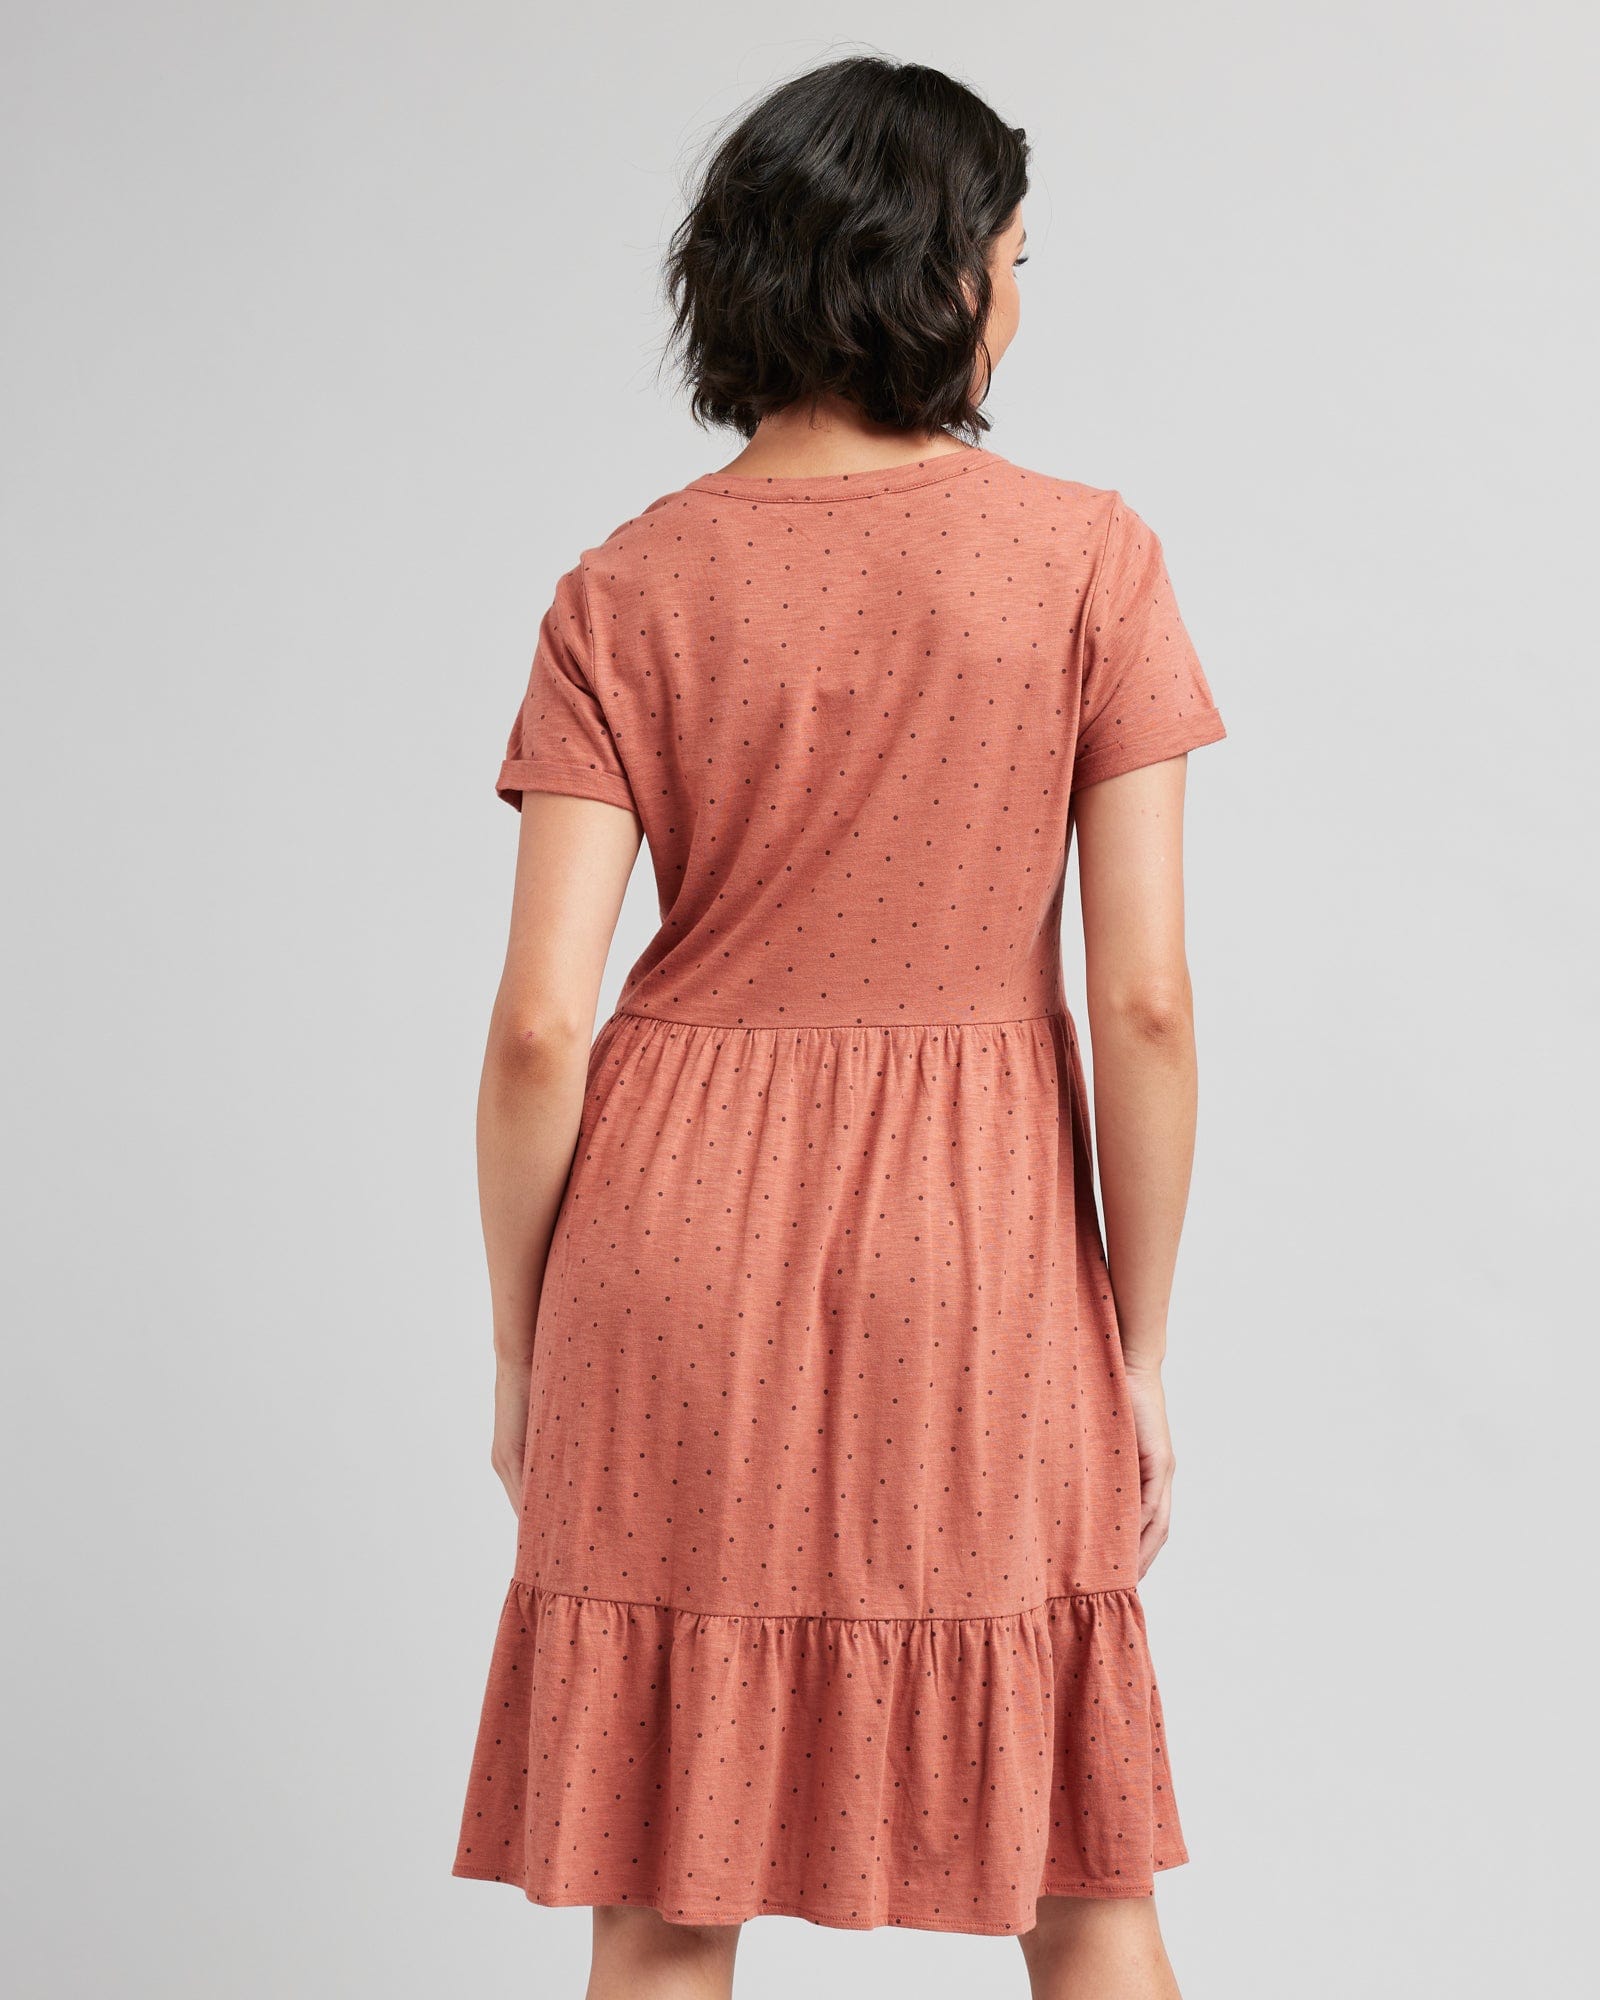 Woman in a short sleeve, henley top, dotted swiss, orange dress